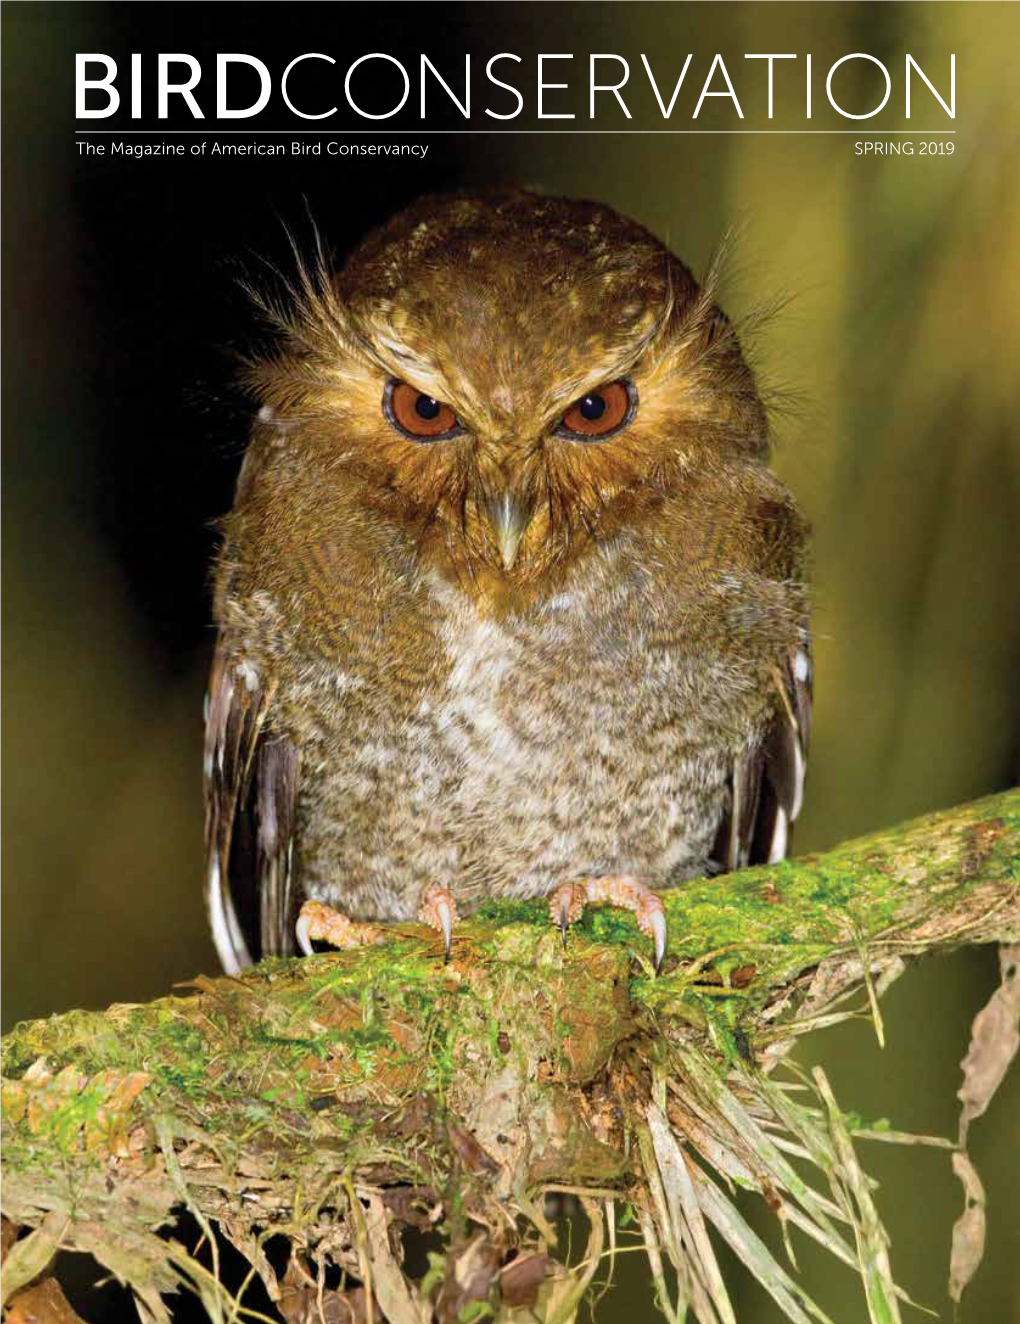 BIRDCONSERVATION the Magazine of American Bird Conservancy SPRING 2019 BIRD’S EYE VIEW